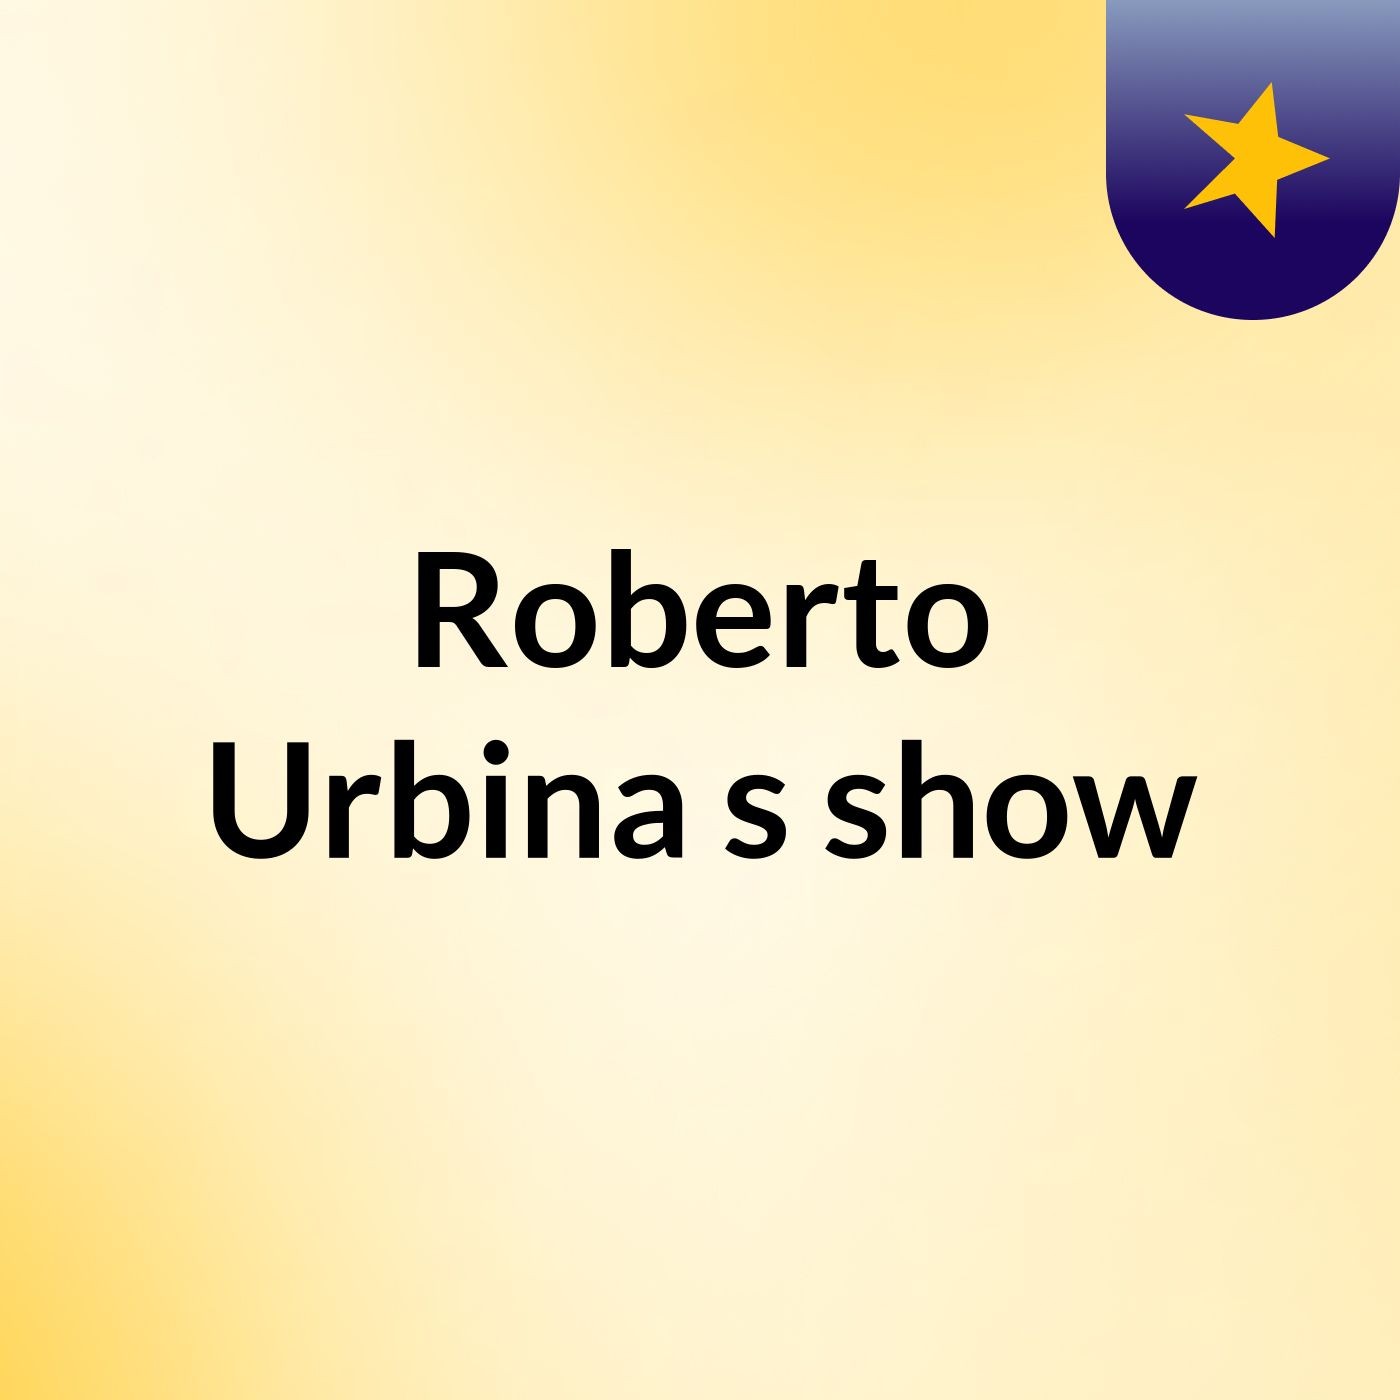 Roberto Urbina's show